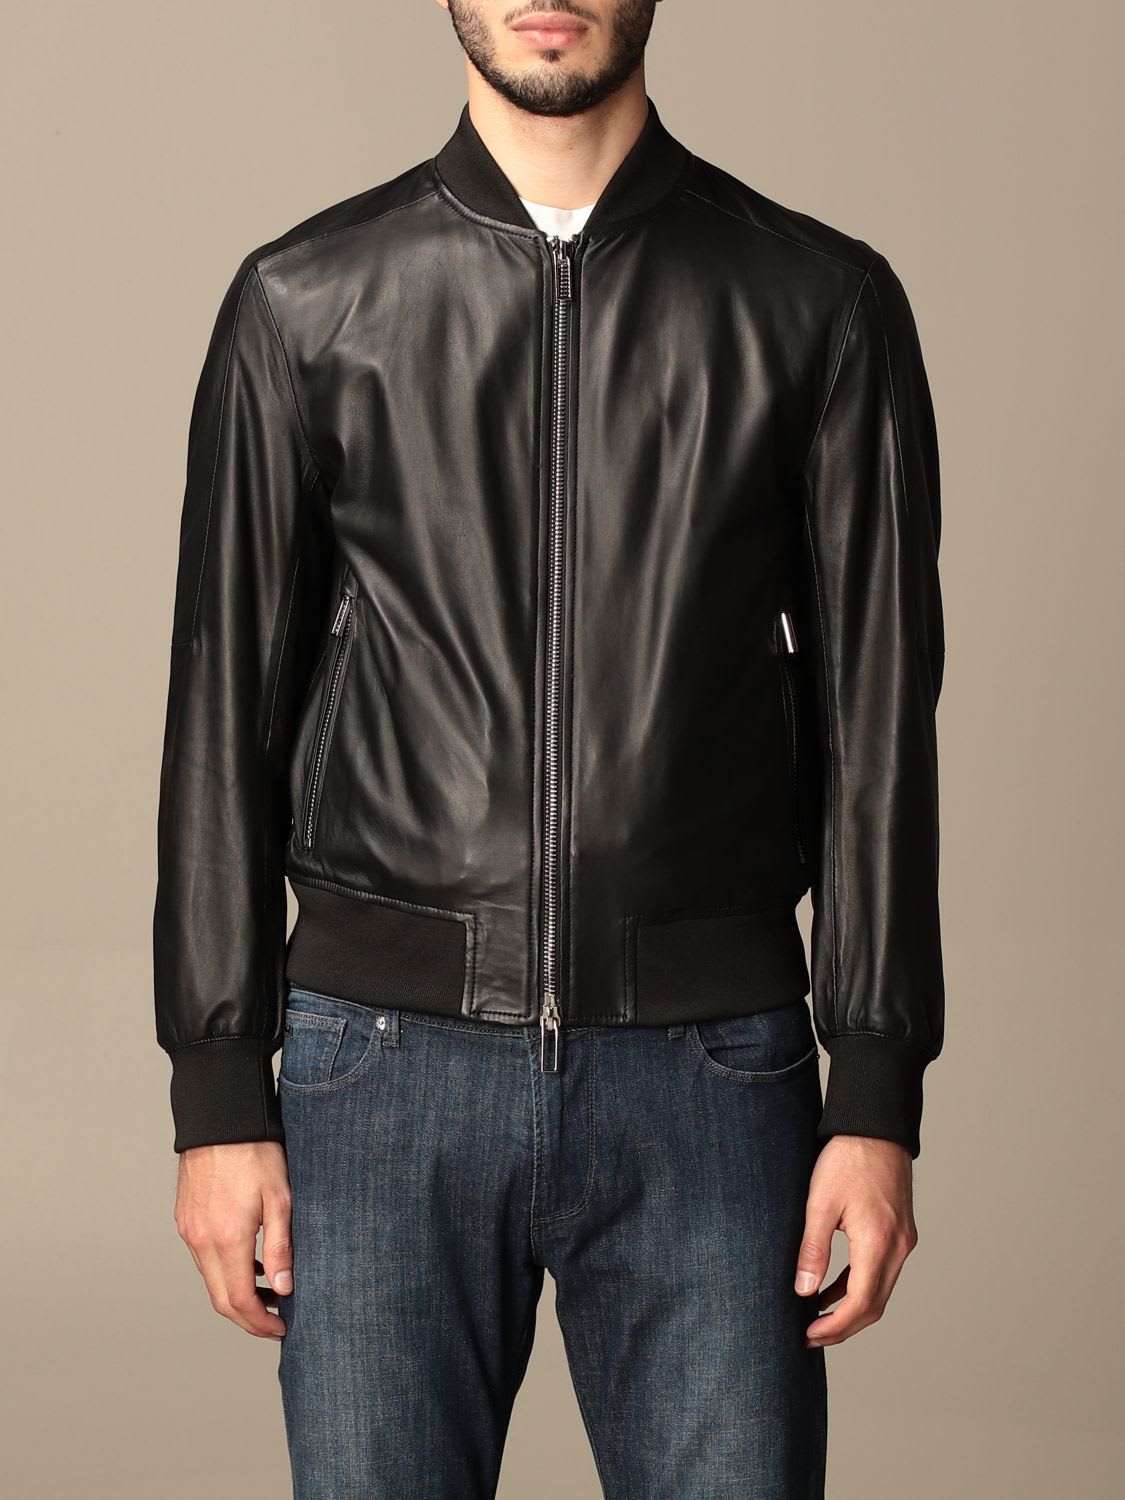 Emporio Armani Jacket Emporio Armani Leather Bomber Jacket